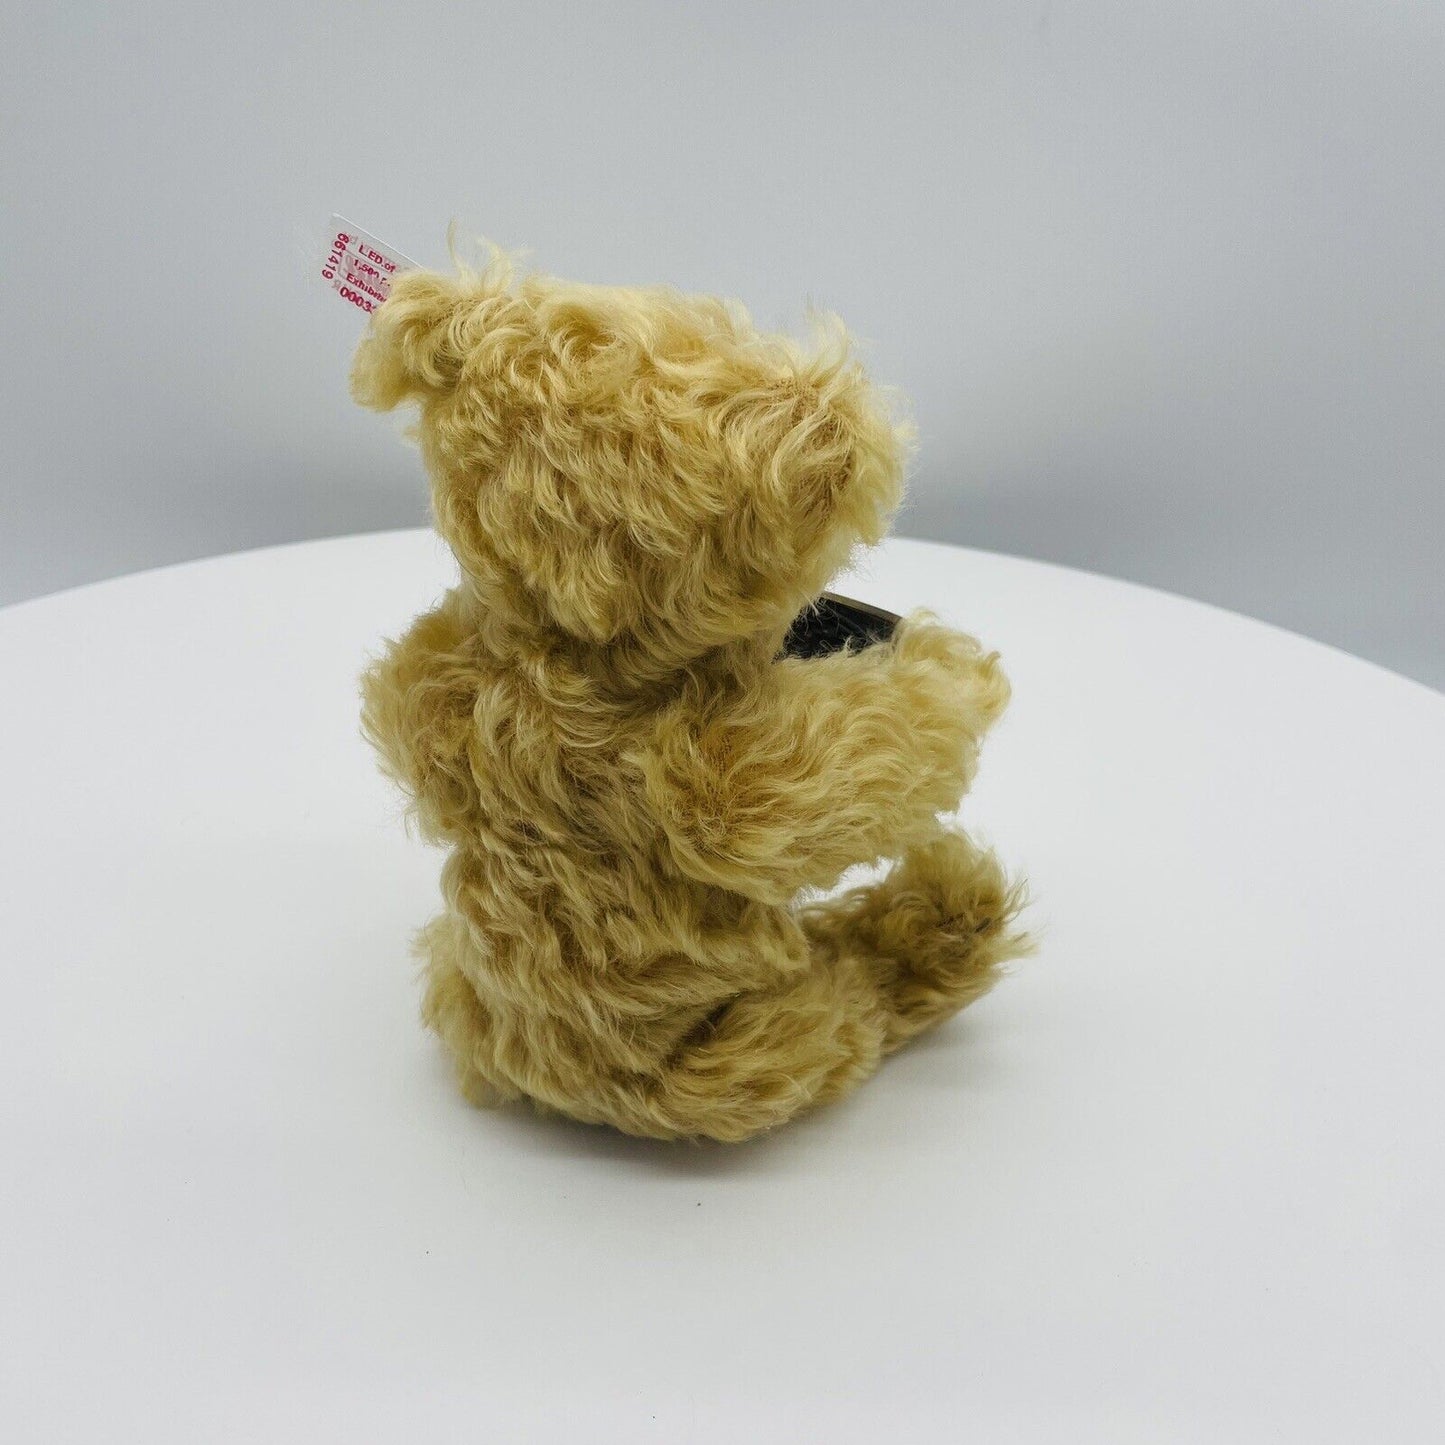 Steiff Teddybär Exhibition Bear 661419 limitiert 1500 aus 2004 UK exklusiv 20cm